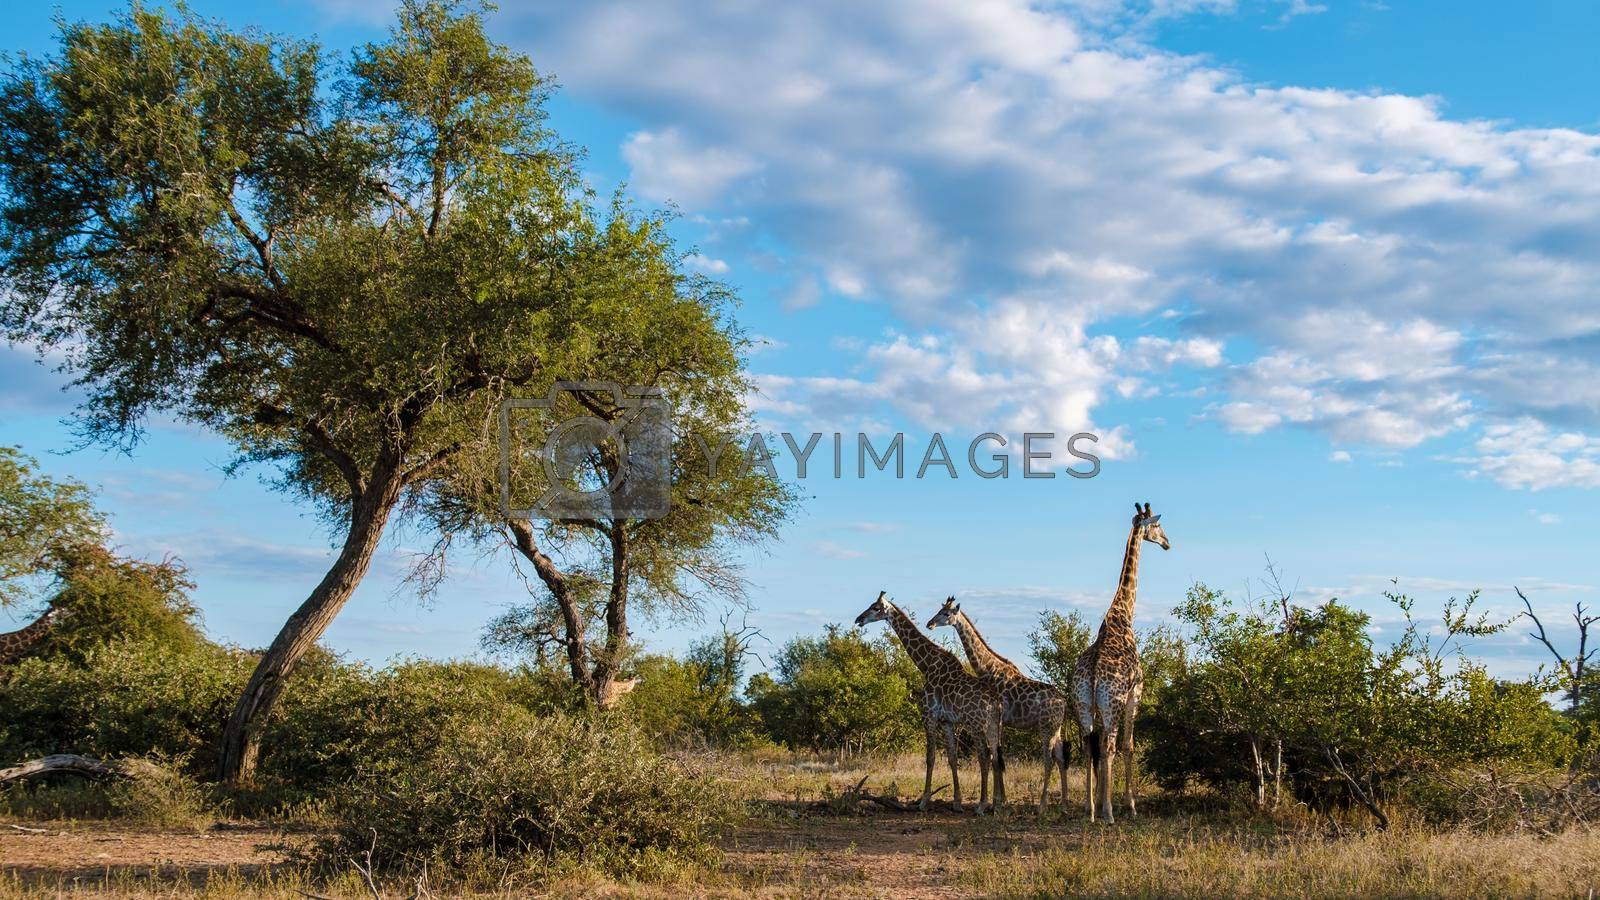 Royalty free image of Giraffe in the bush of Kruger national park South Africa by fokkebok